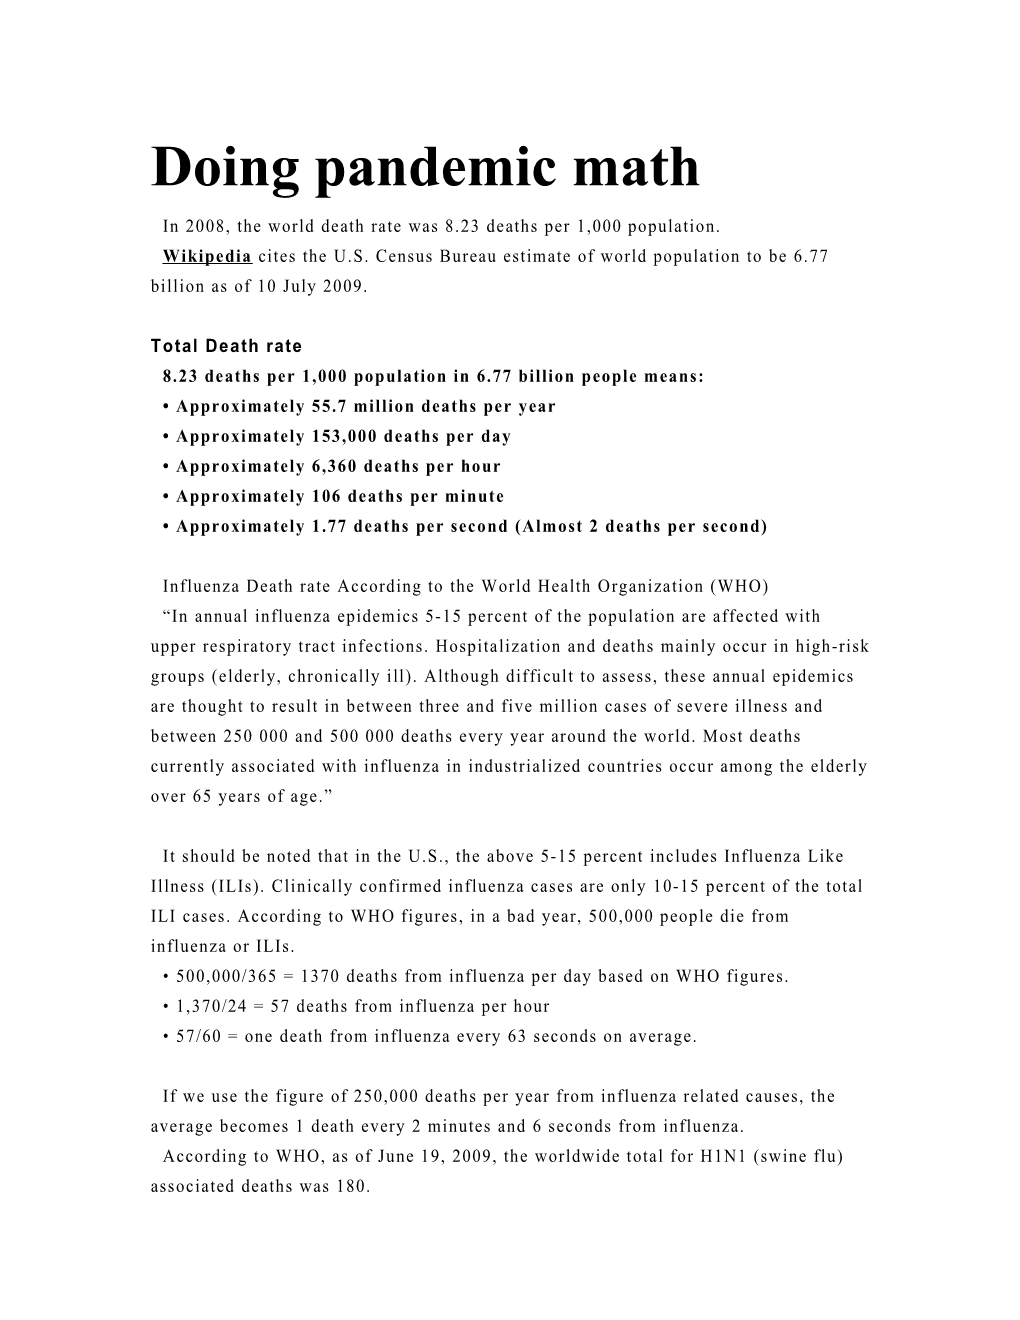 Doing Pandemic Math